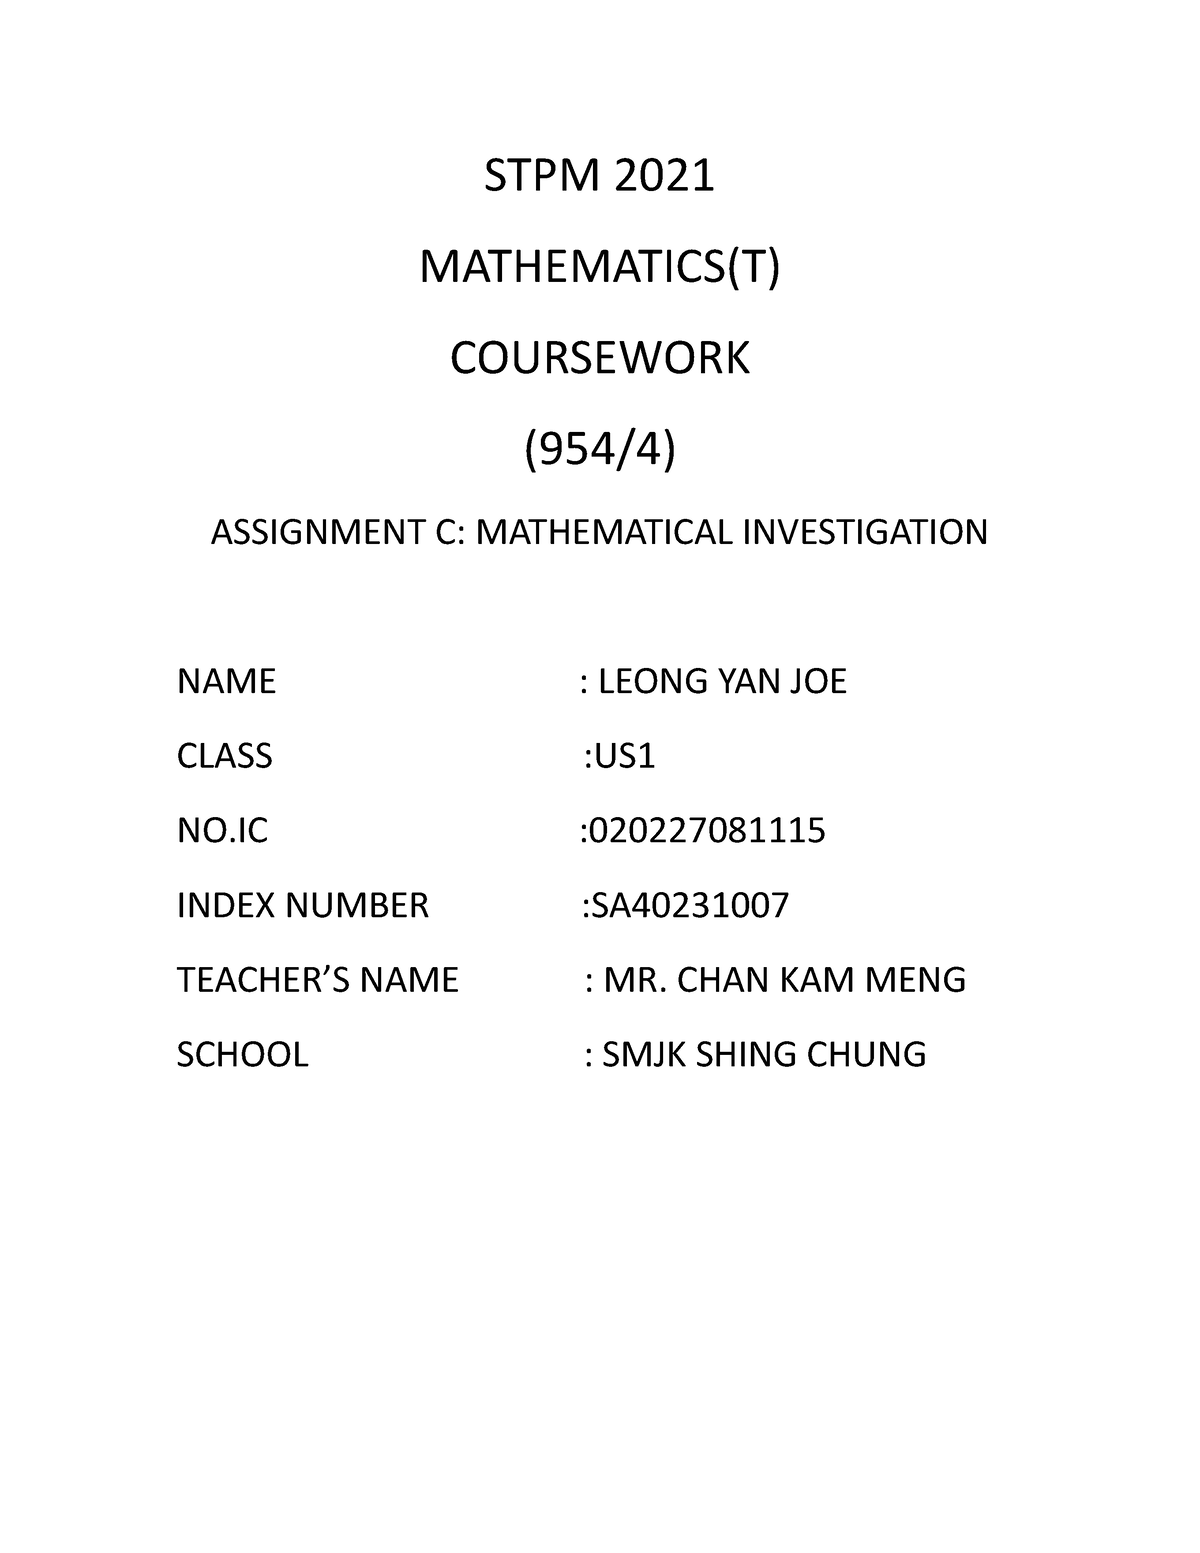 stpm mathematics t assignment methodology 2021